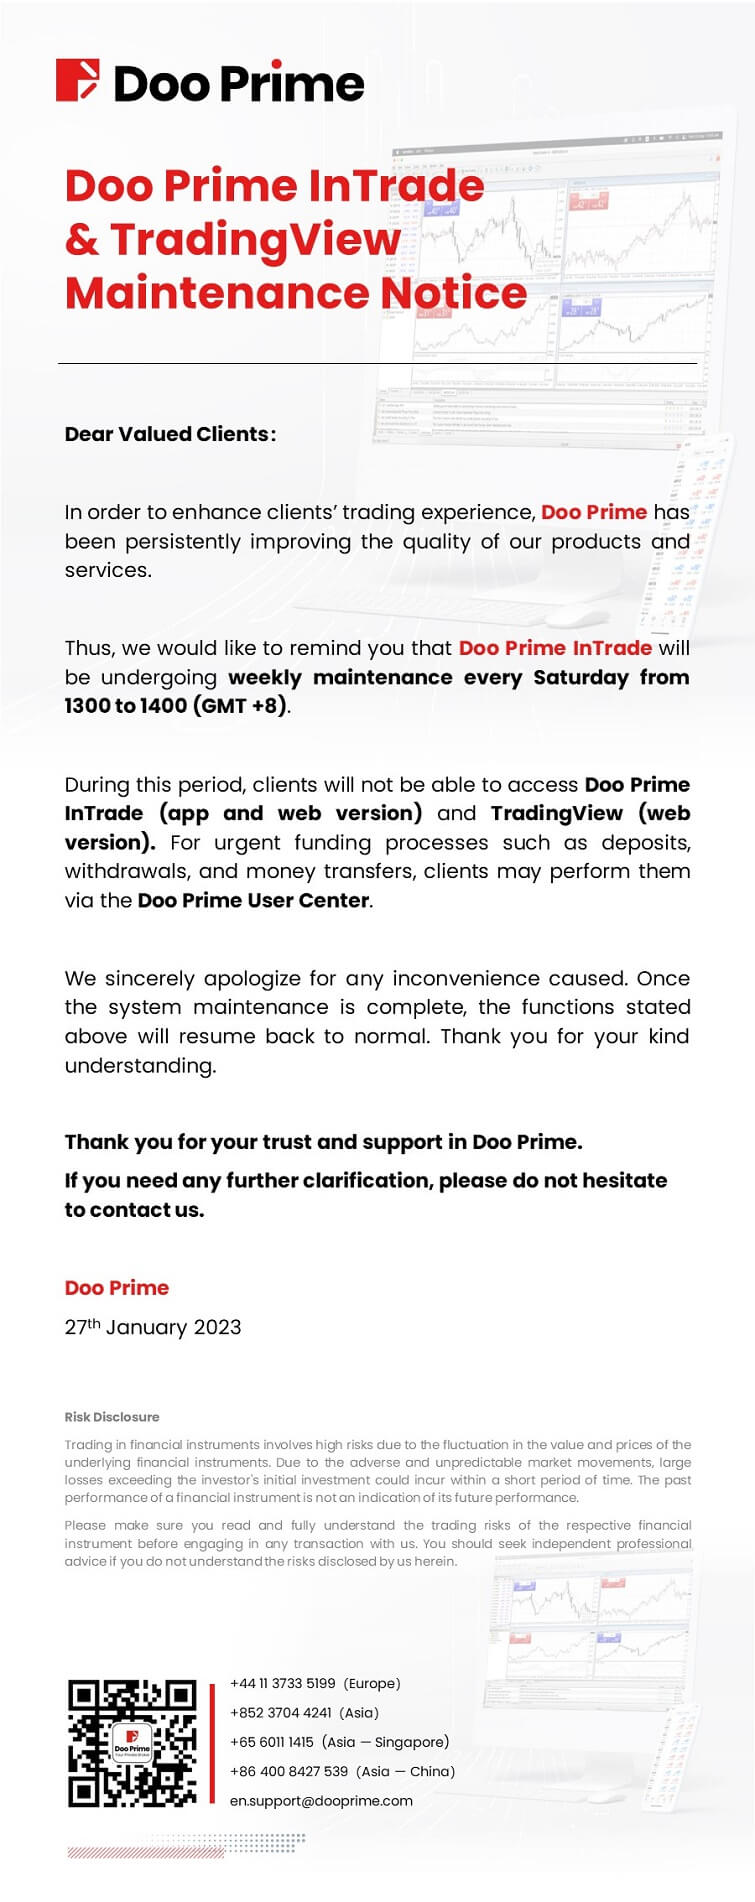 Doo Prime InTrade & TradingView Maintenance Notice